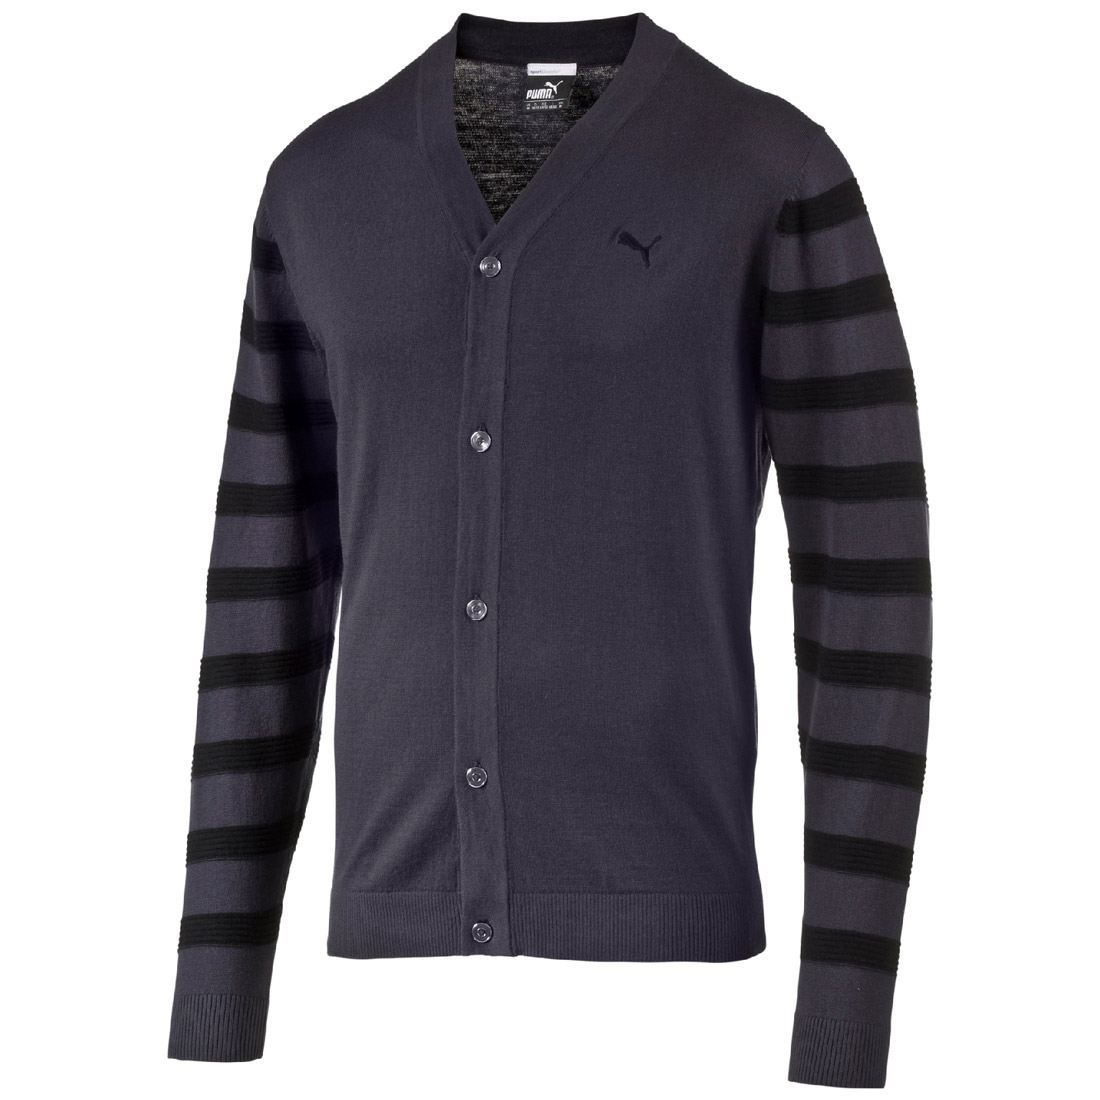 Puma Golf Sport Lux Cardigan Neck Sweater Pullunder Jacke graphite-black